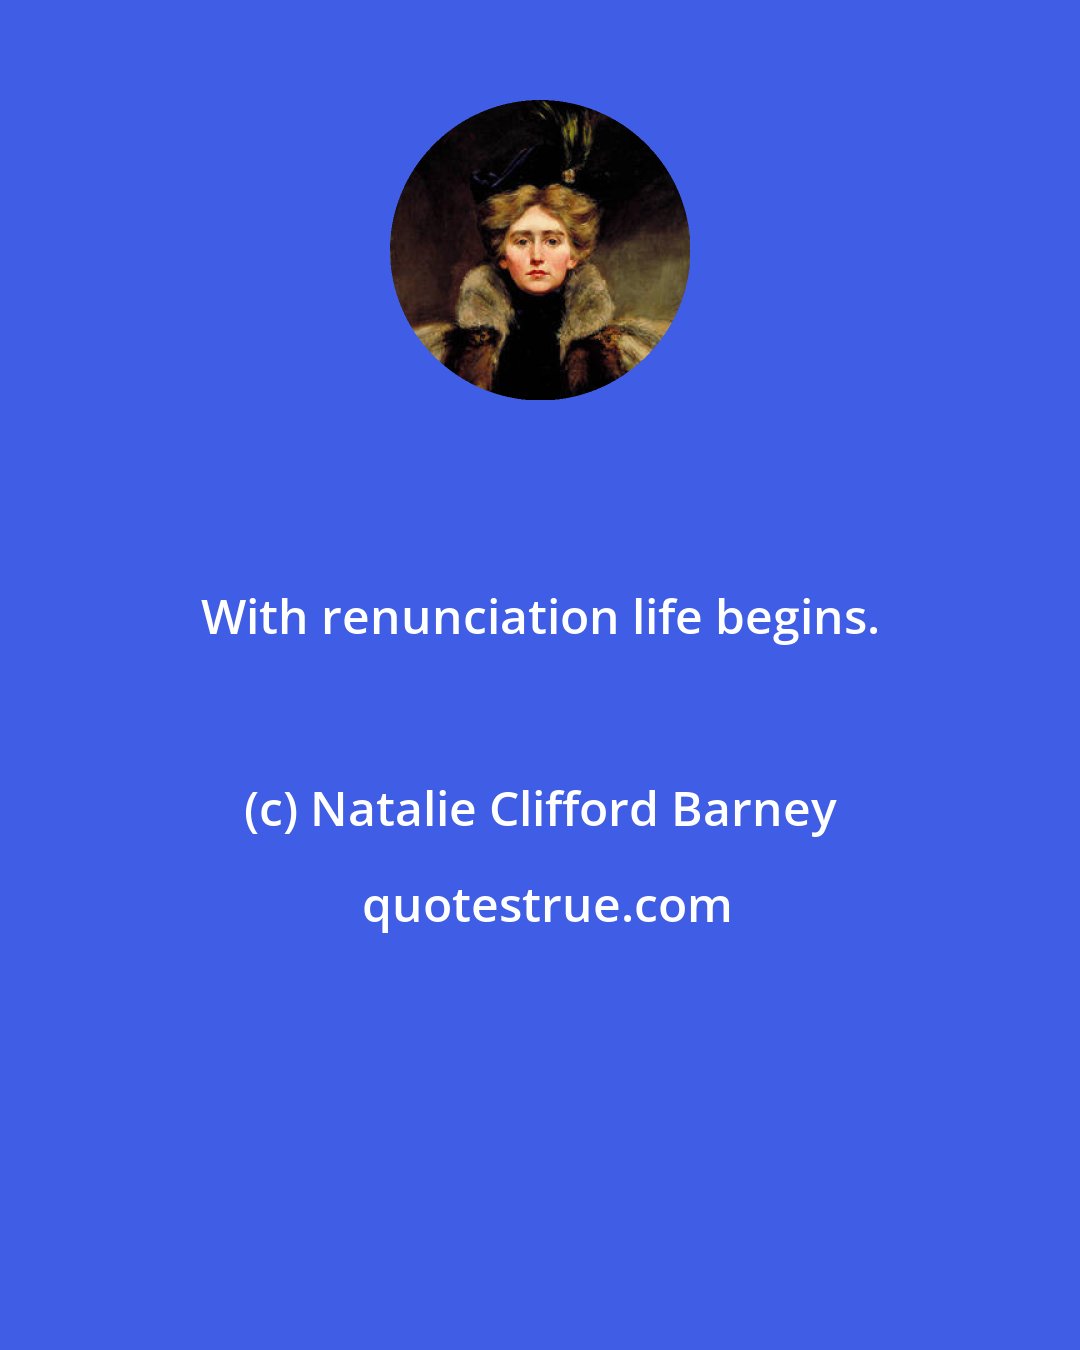 Natalie Clifford Barney: With renunciation life begins.